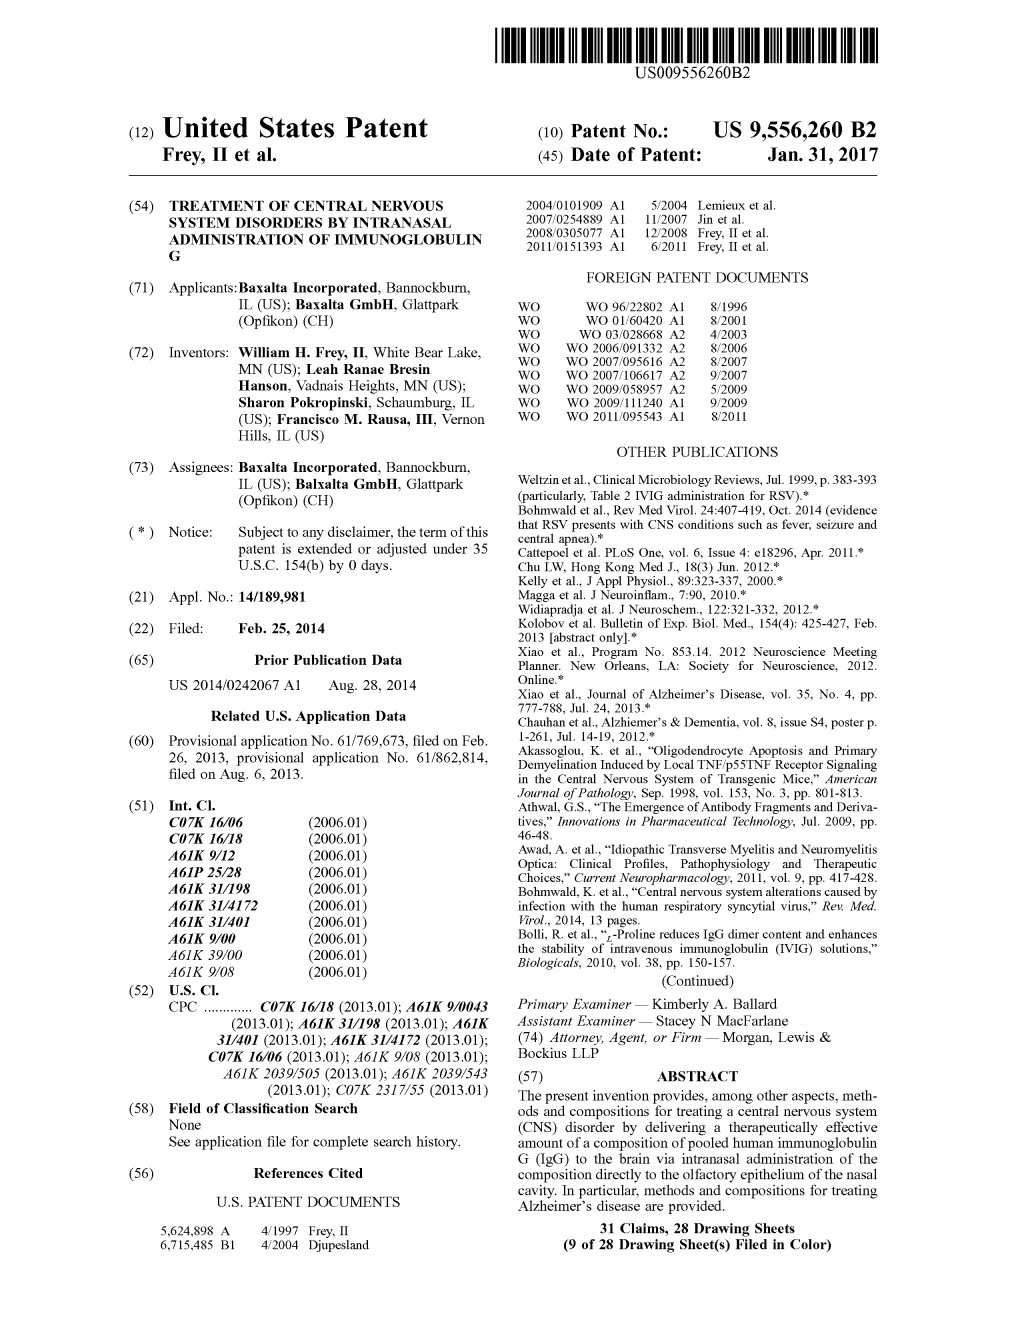 United States Patent (10) Patent No.: US 9,556.260 B2 Frey, II Et Al